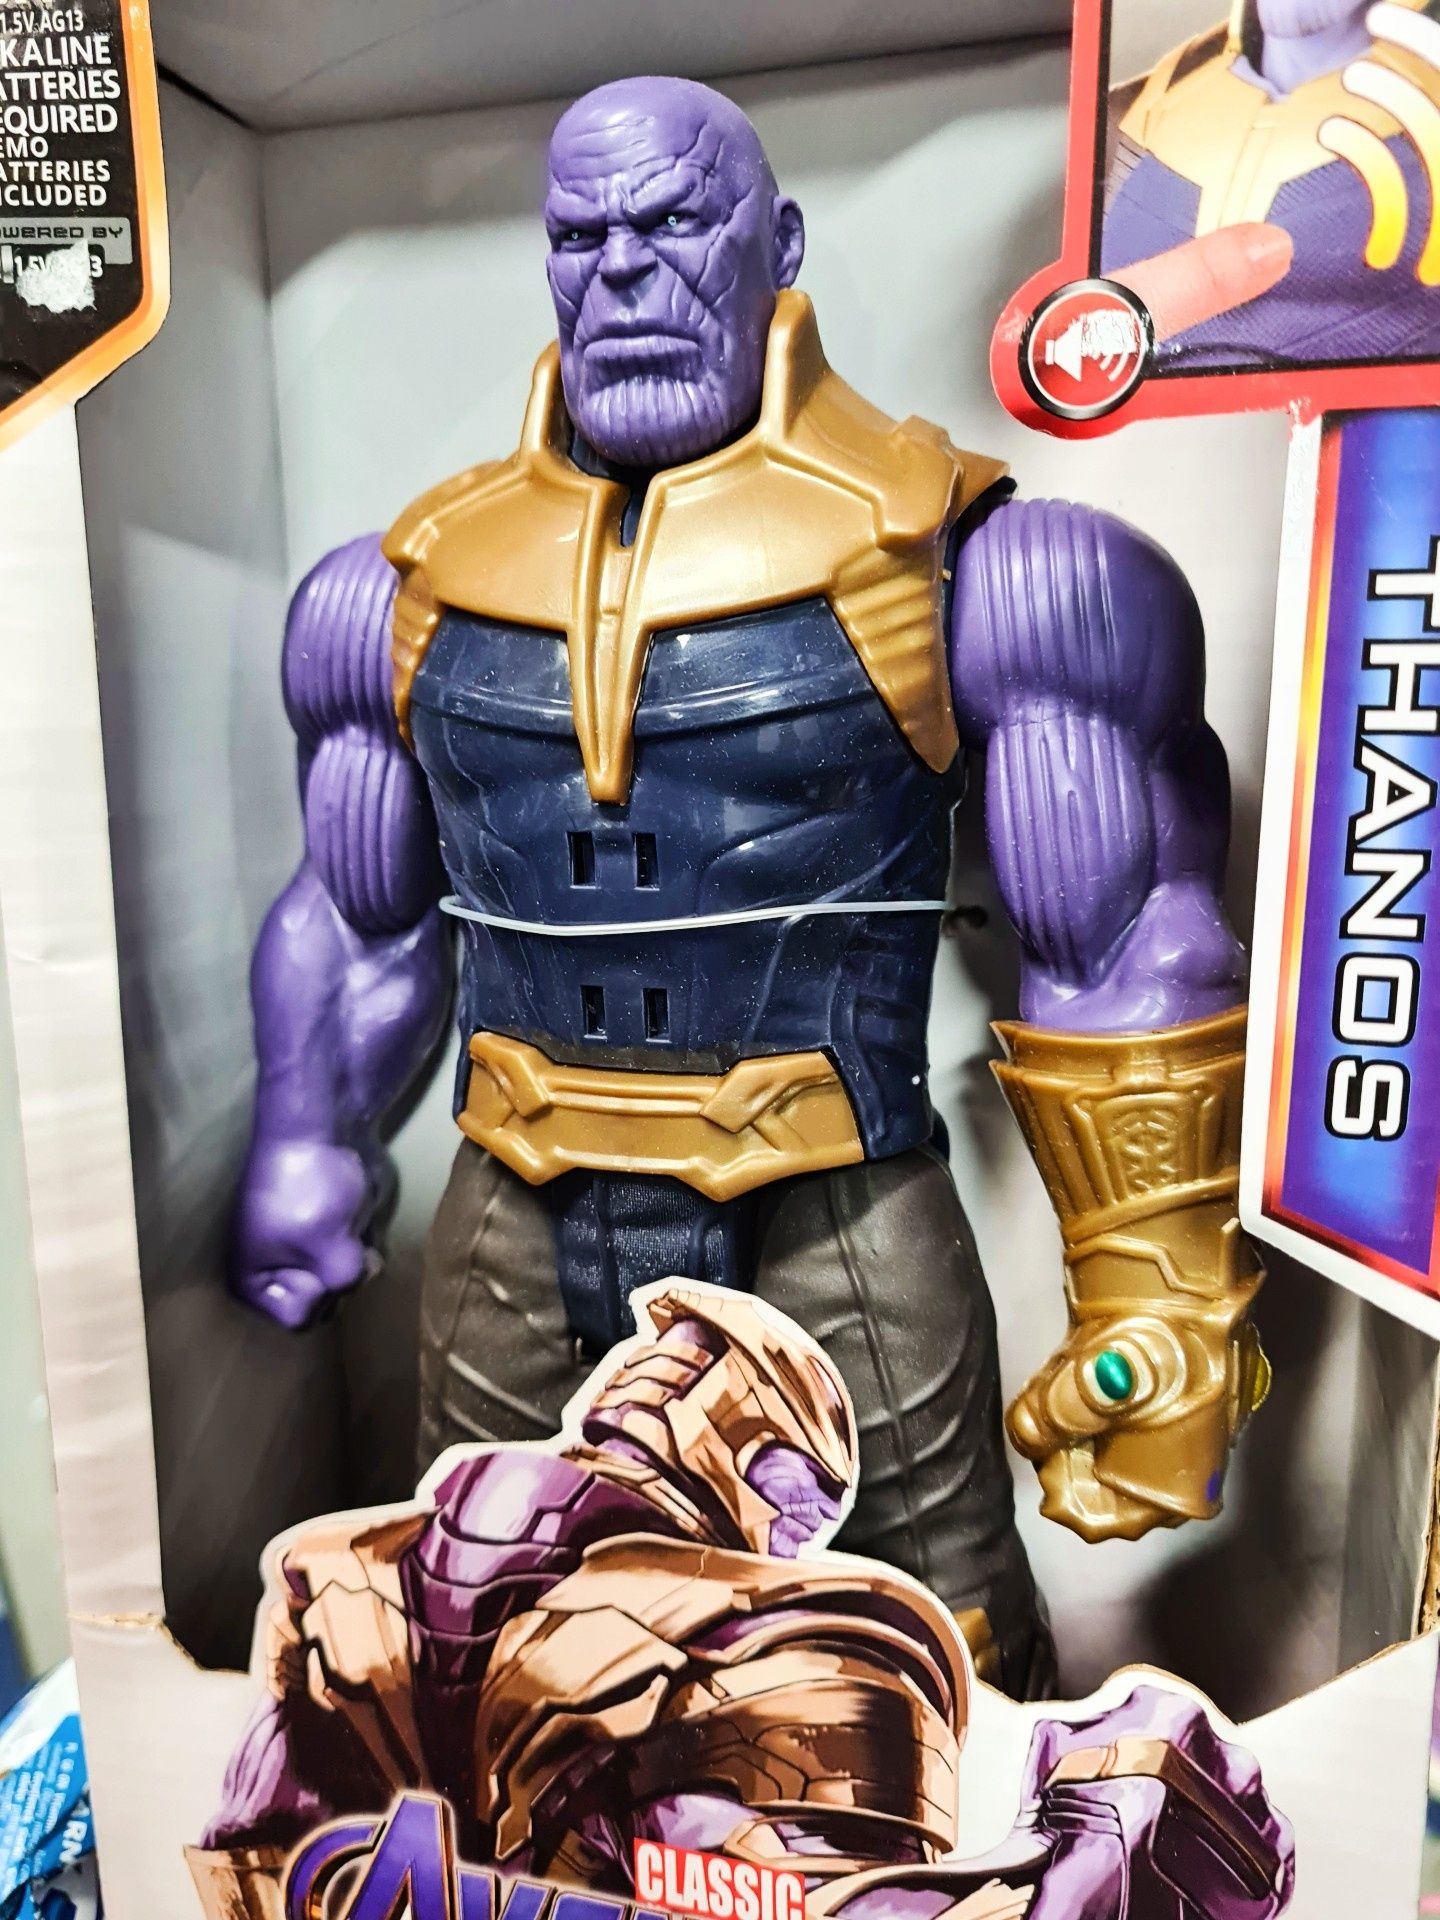 Nowa duża figurka Thanos z Avengers Marvel Uniwersum zabawki